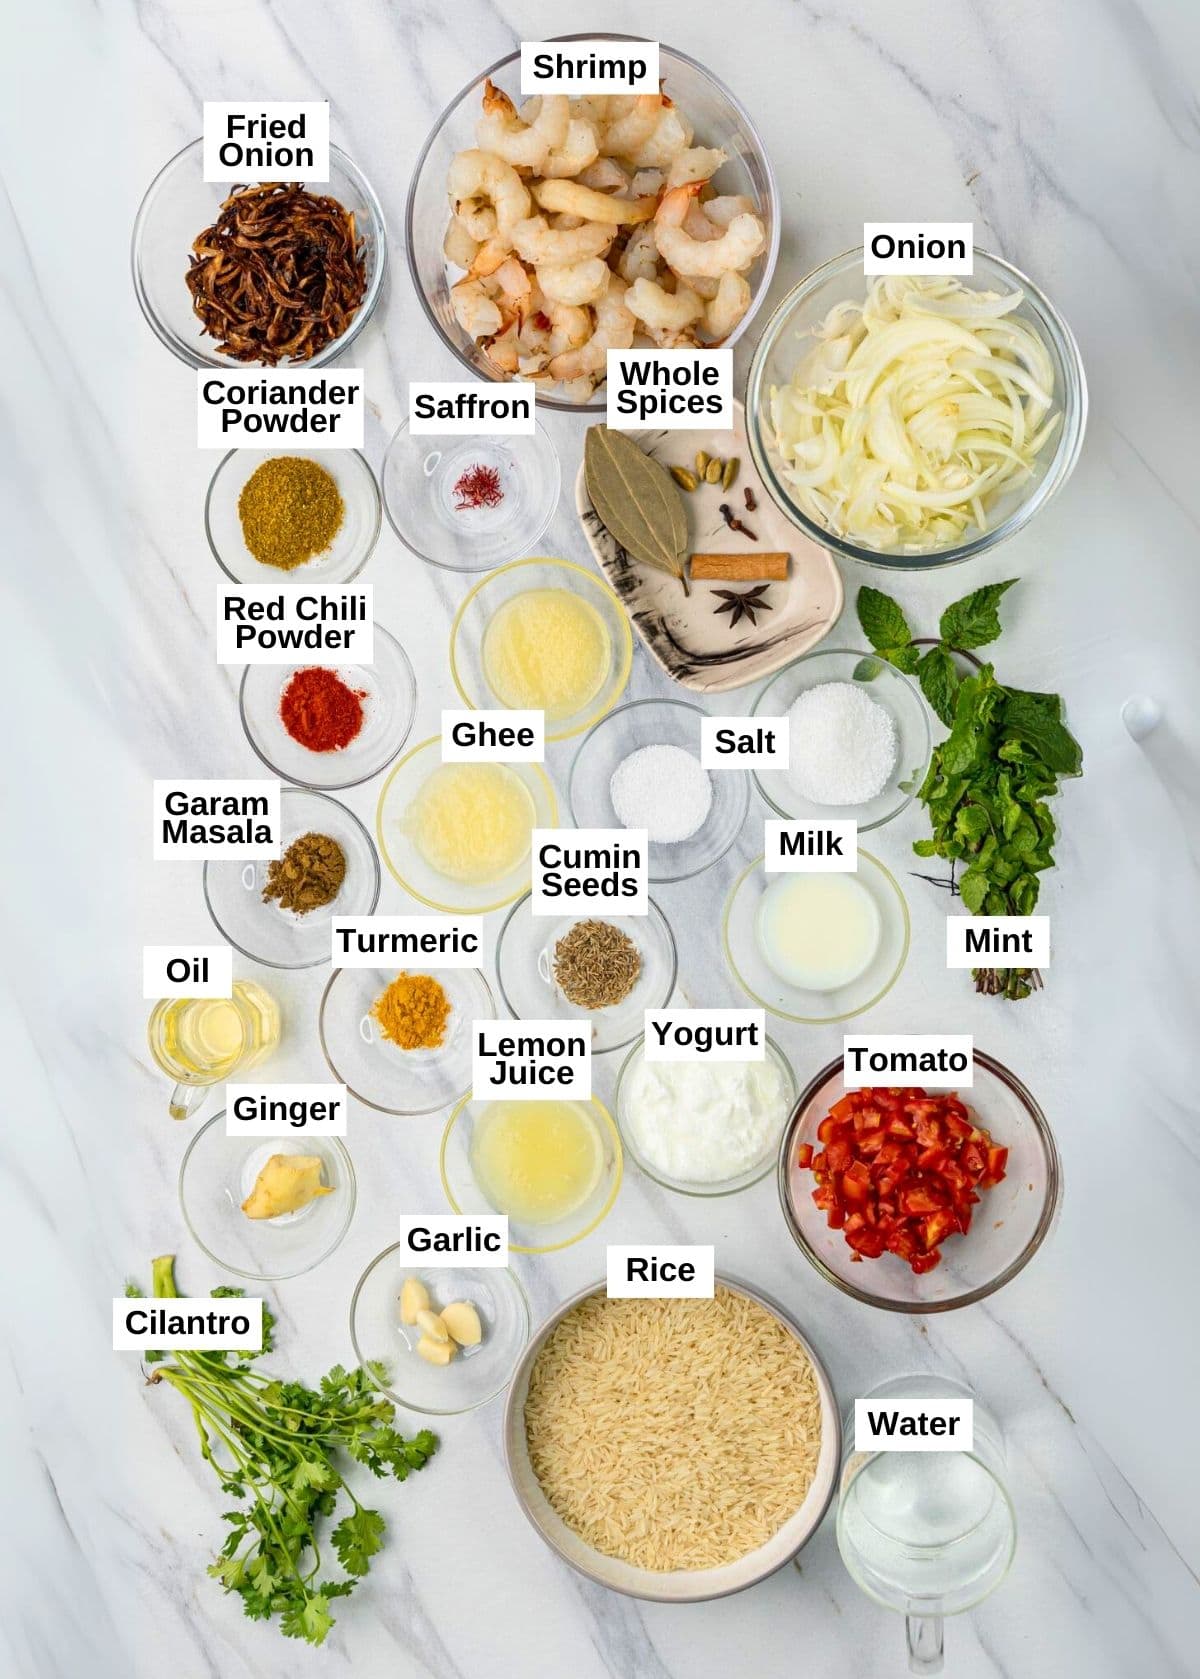 Shrimp Biryani Ingredients